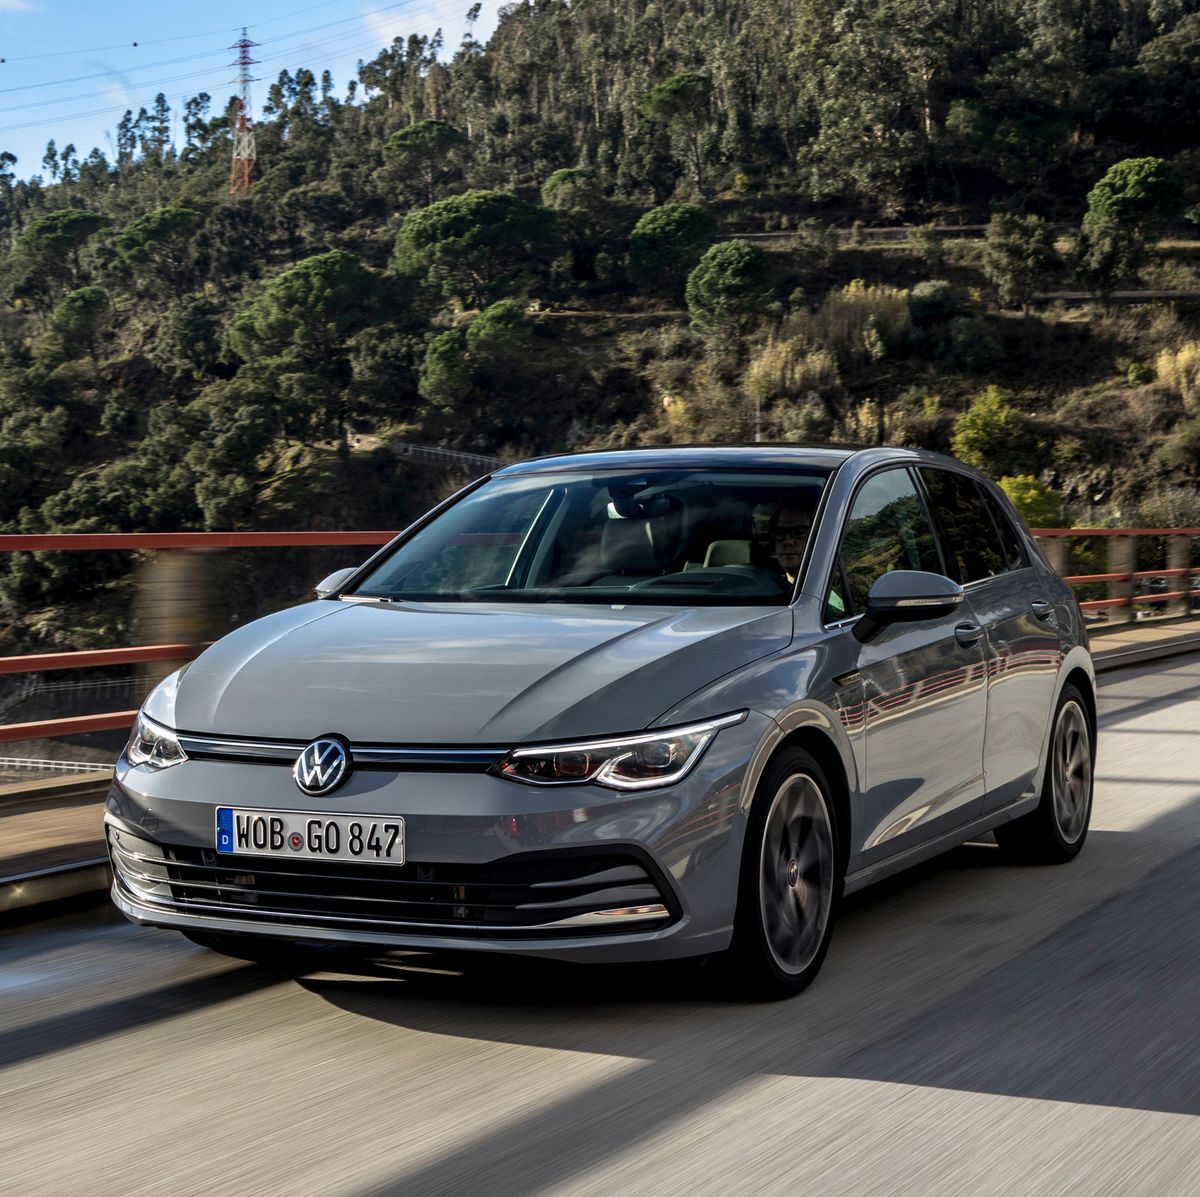 2020 Volkswagen Golf Has Evolved into a Futuristic Device